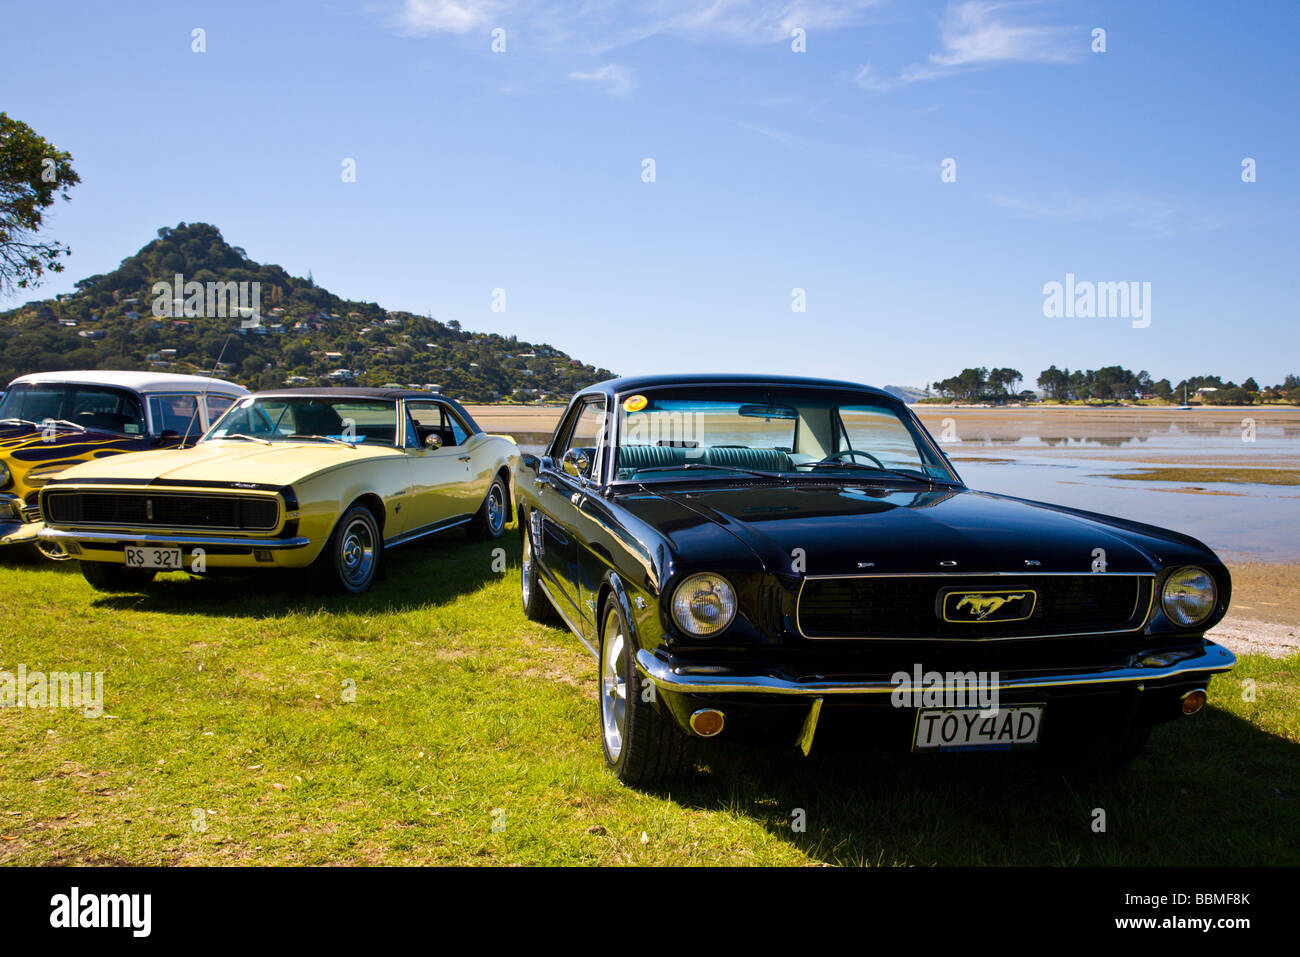 Car show at Tairua North Island New Zealand Stock Photo